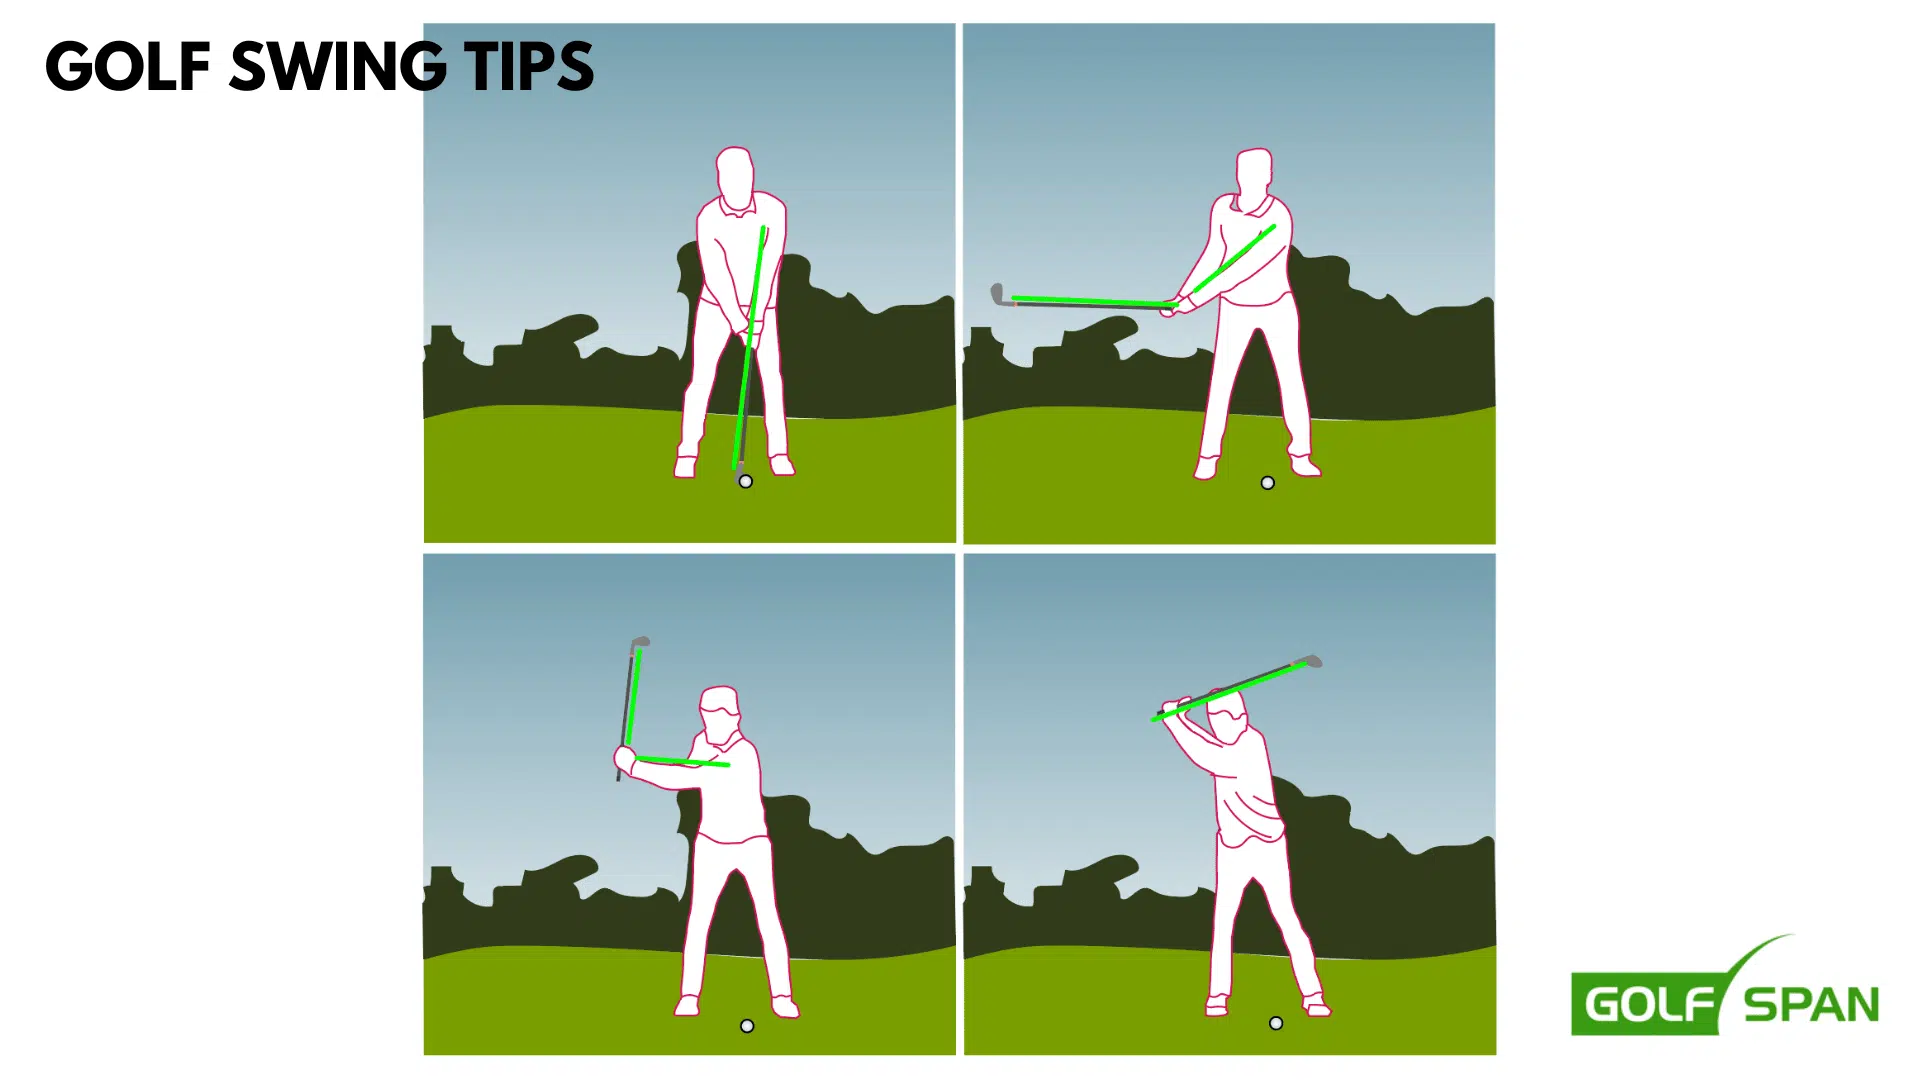 Golf swing tips